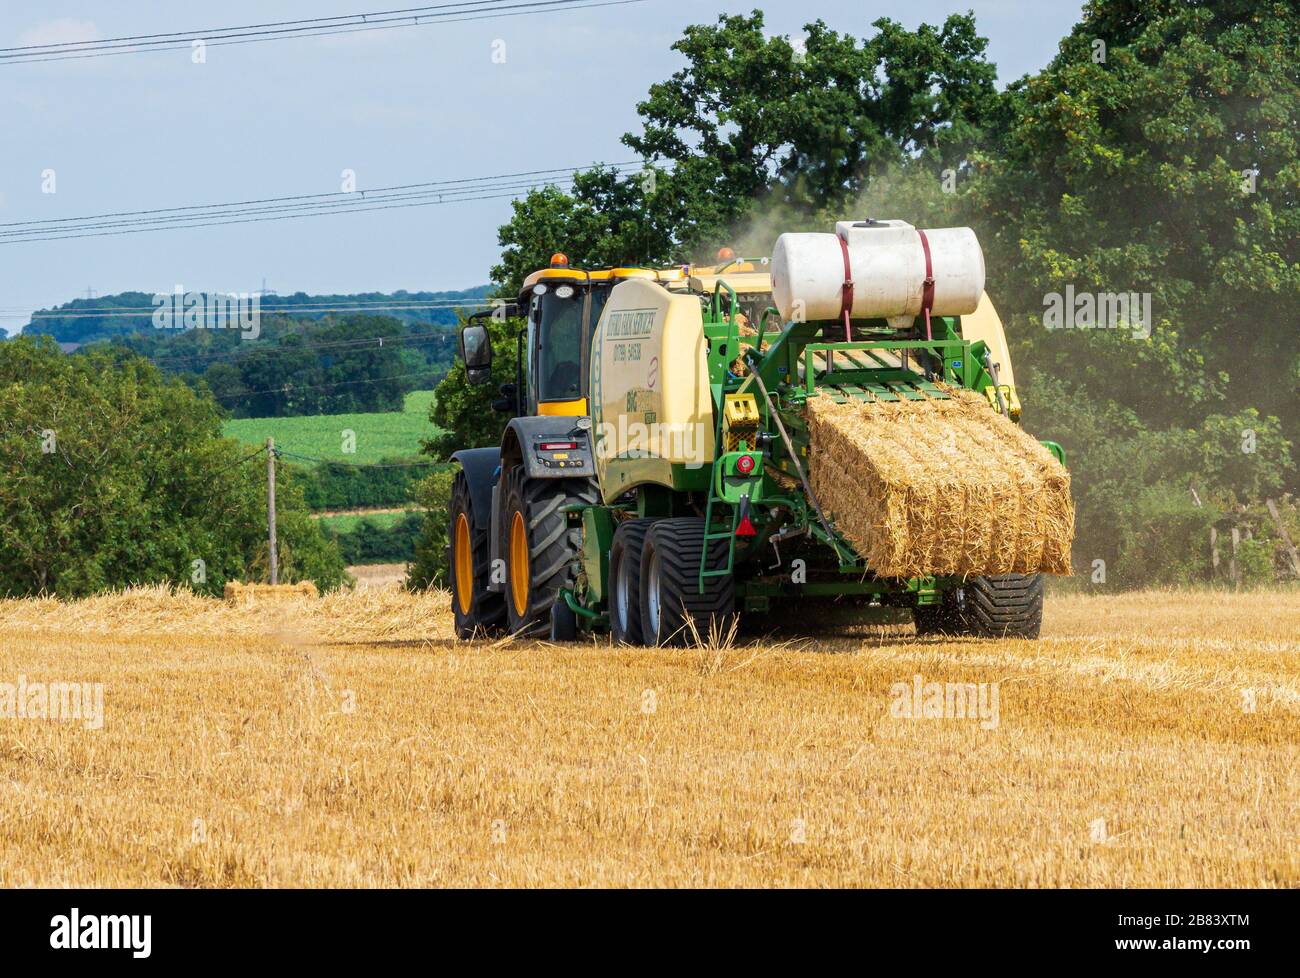 Farm baling machine operating in field Stock Photo